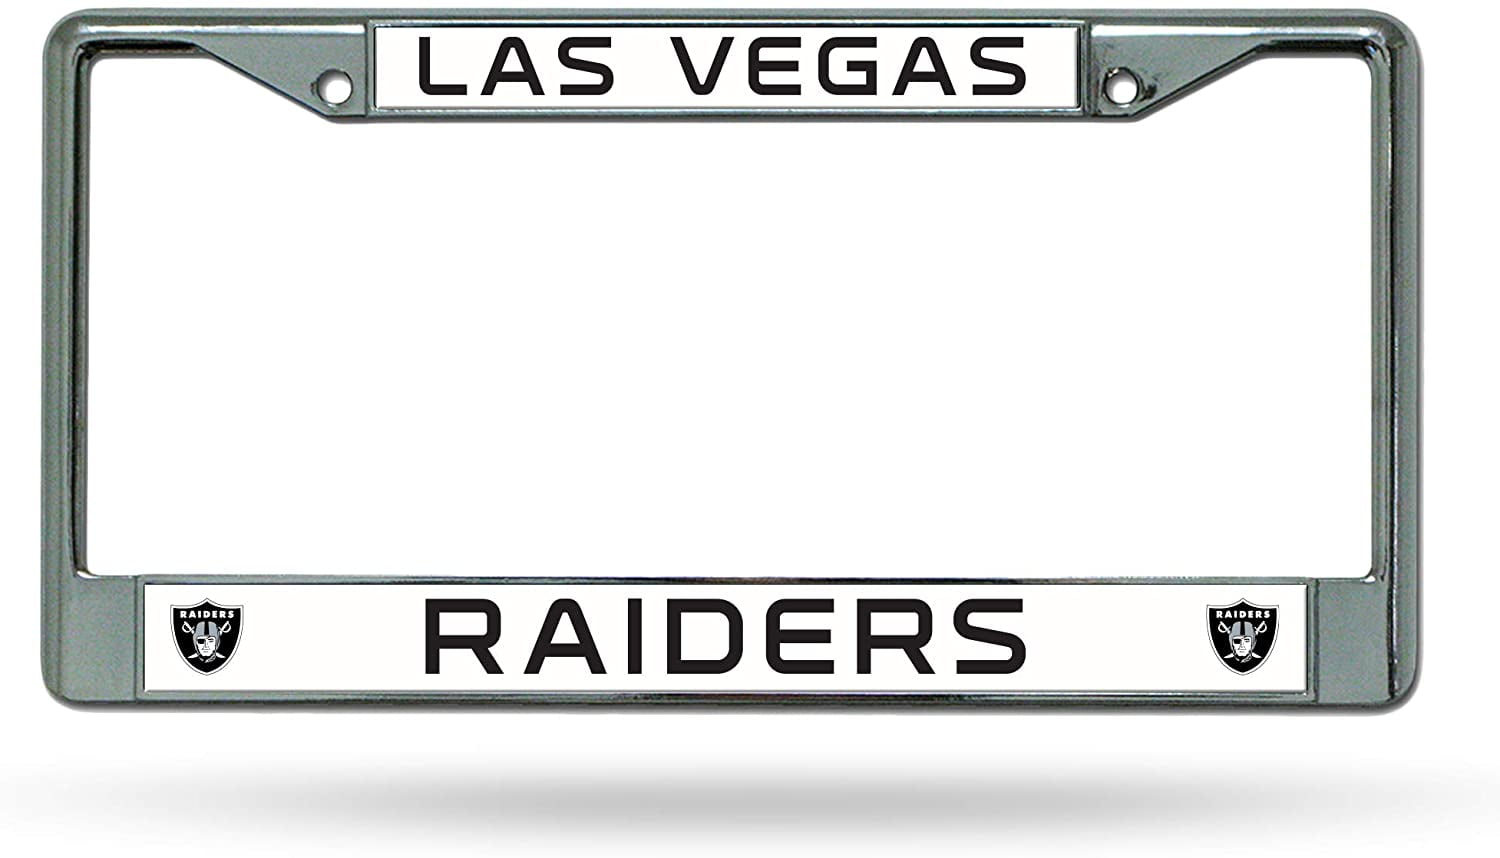 Las Vegas Raiders Metal License Plate Frame EZView Carbon Fiber Design Tag Cover 